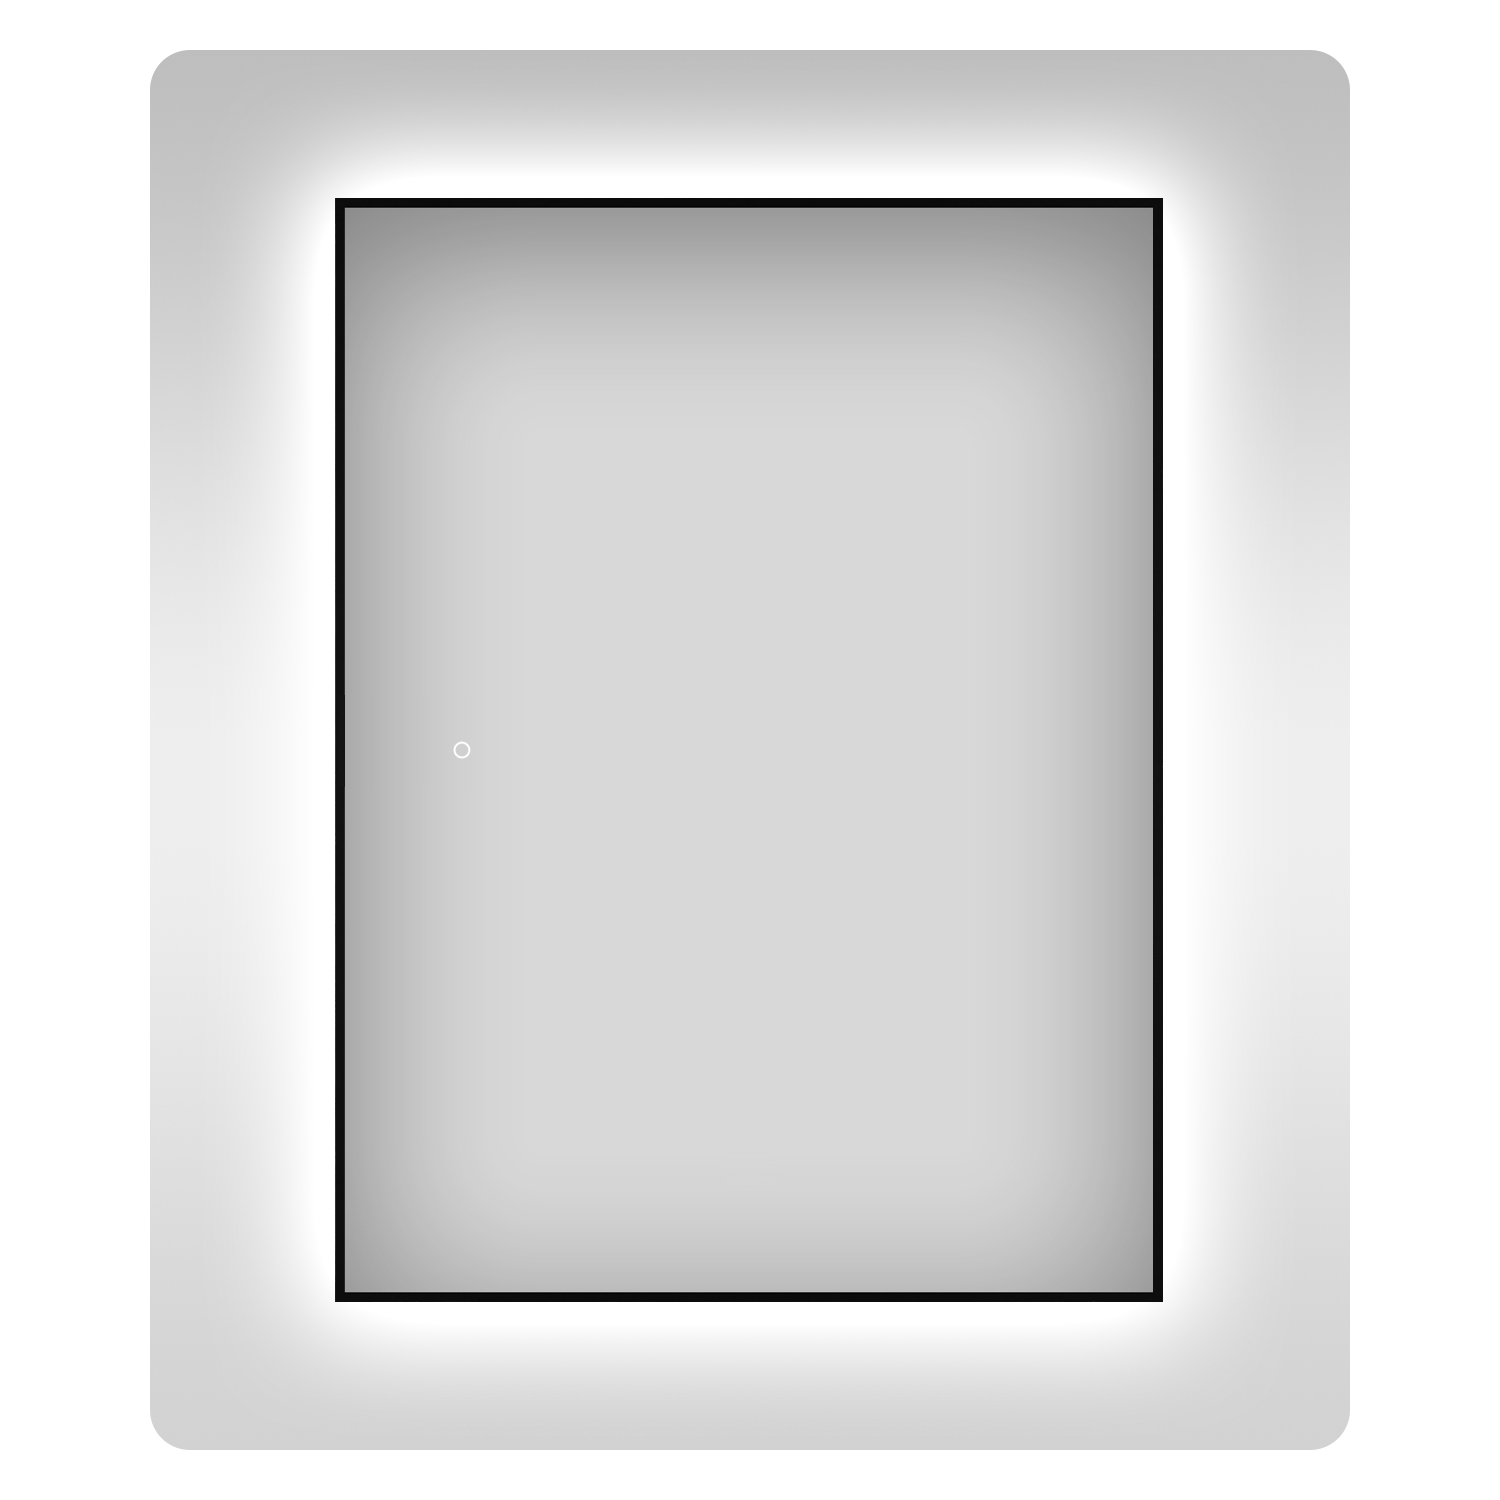 Влагостойкое зеркало с подсветкой для ванной Wellsee 7 Rays' Spectrum 172201080, 80х120 см зеркало с фацетом 15 мм 80х120 см evoform